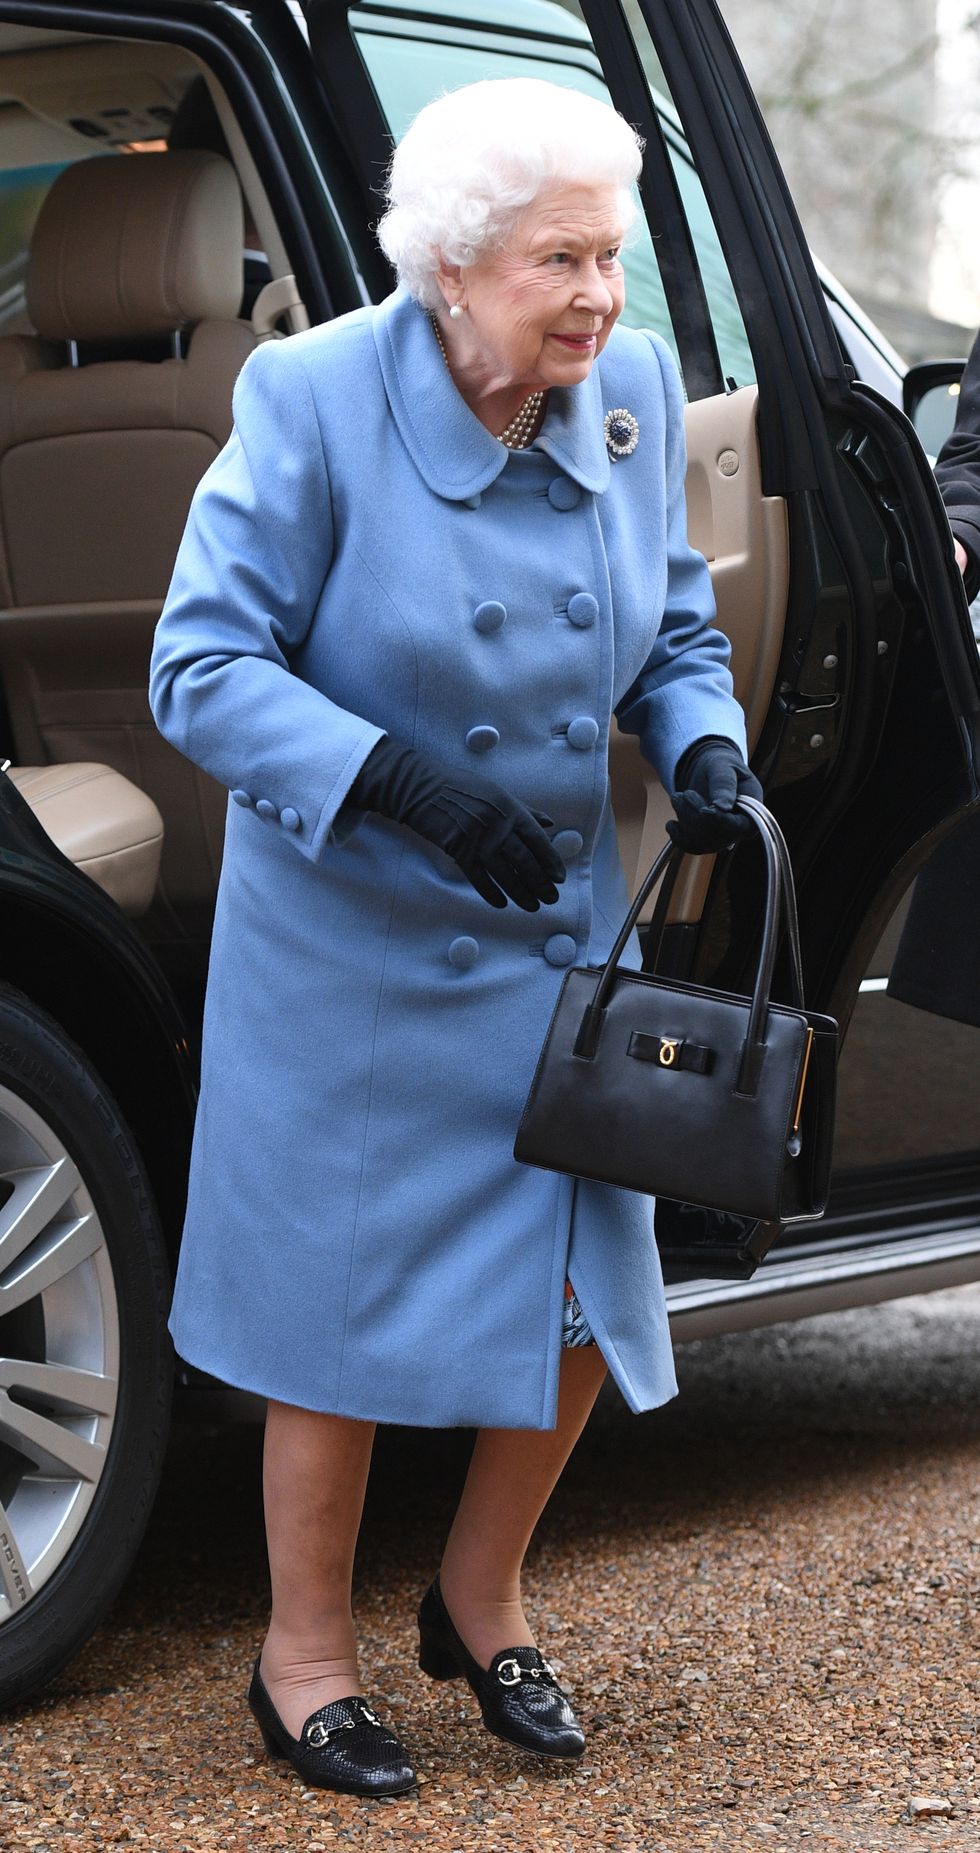 Queen Elizabeth II at WI meeting